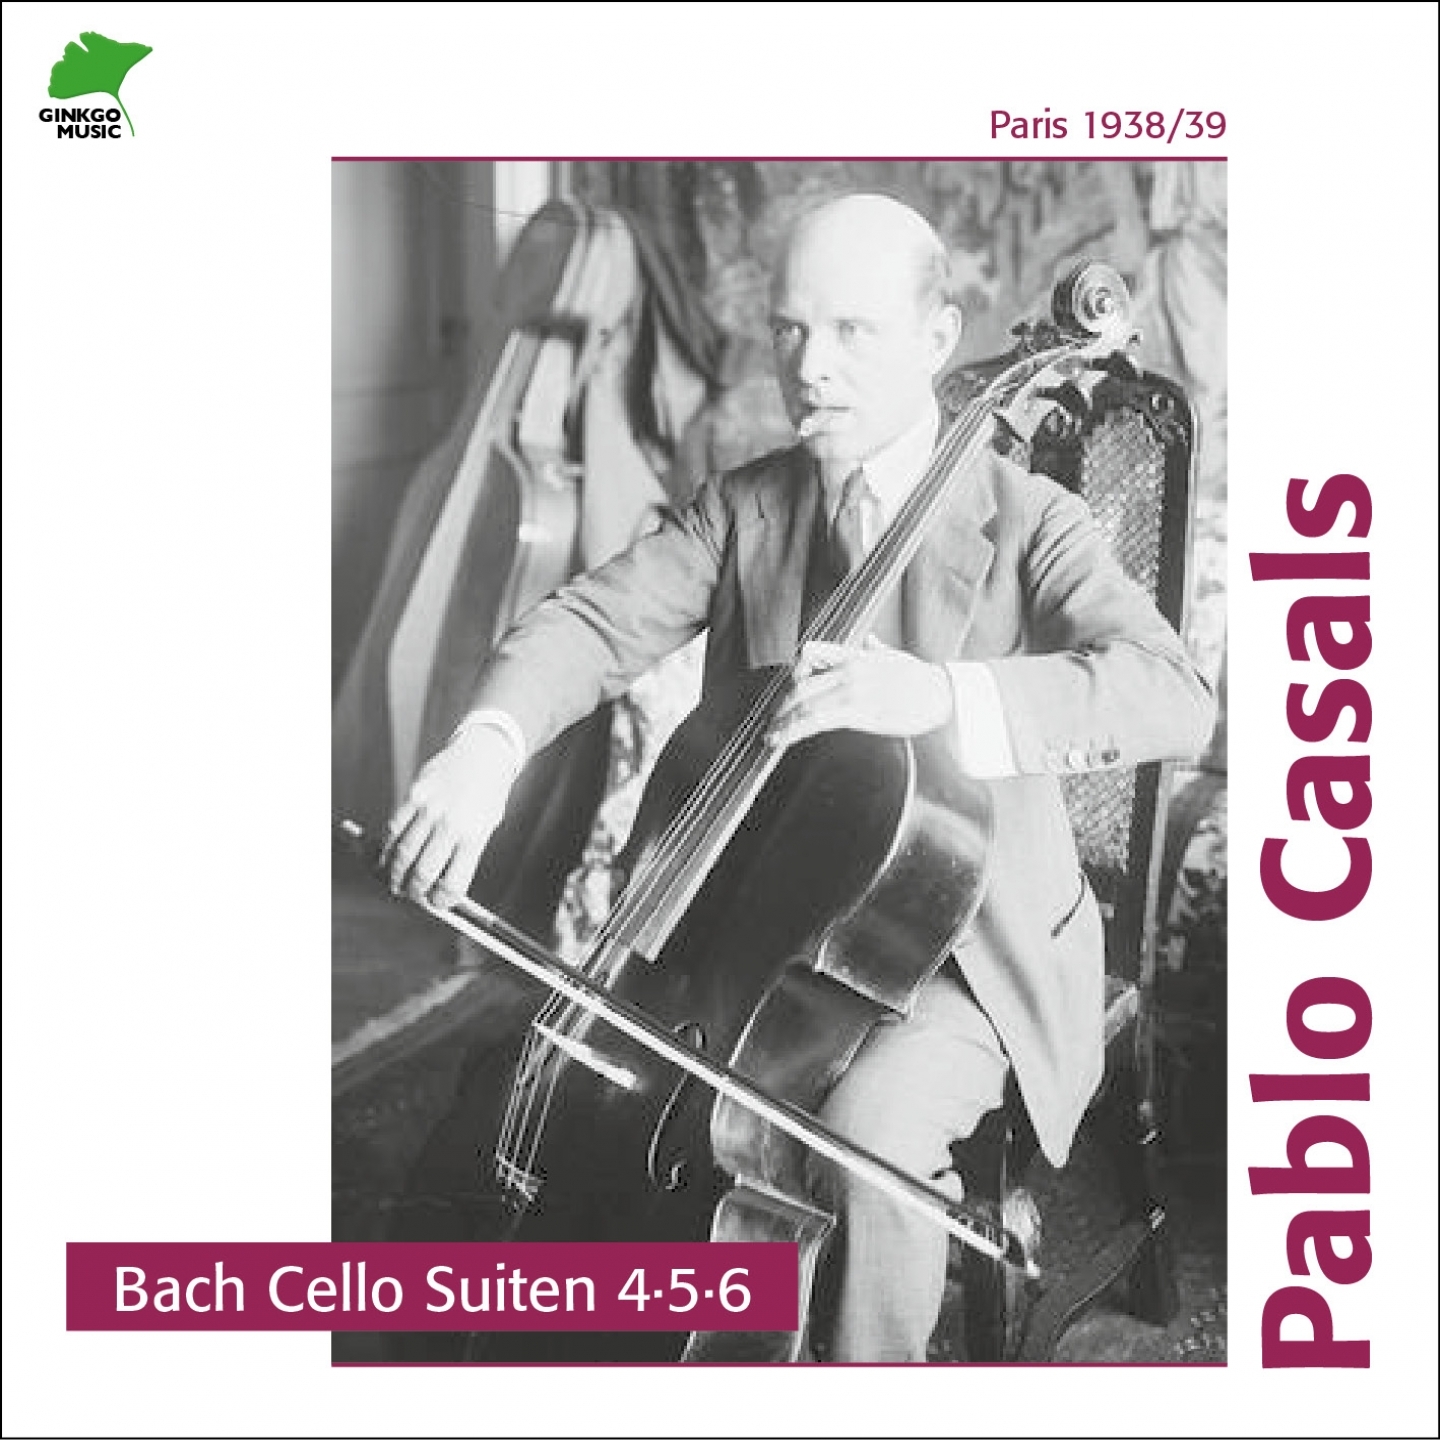 Cello Suite No. 6, in D Major, BWV 1012 Gavotte 1 & 2